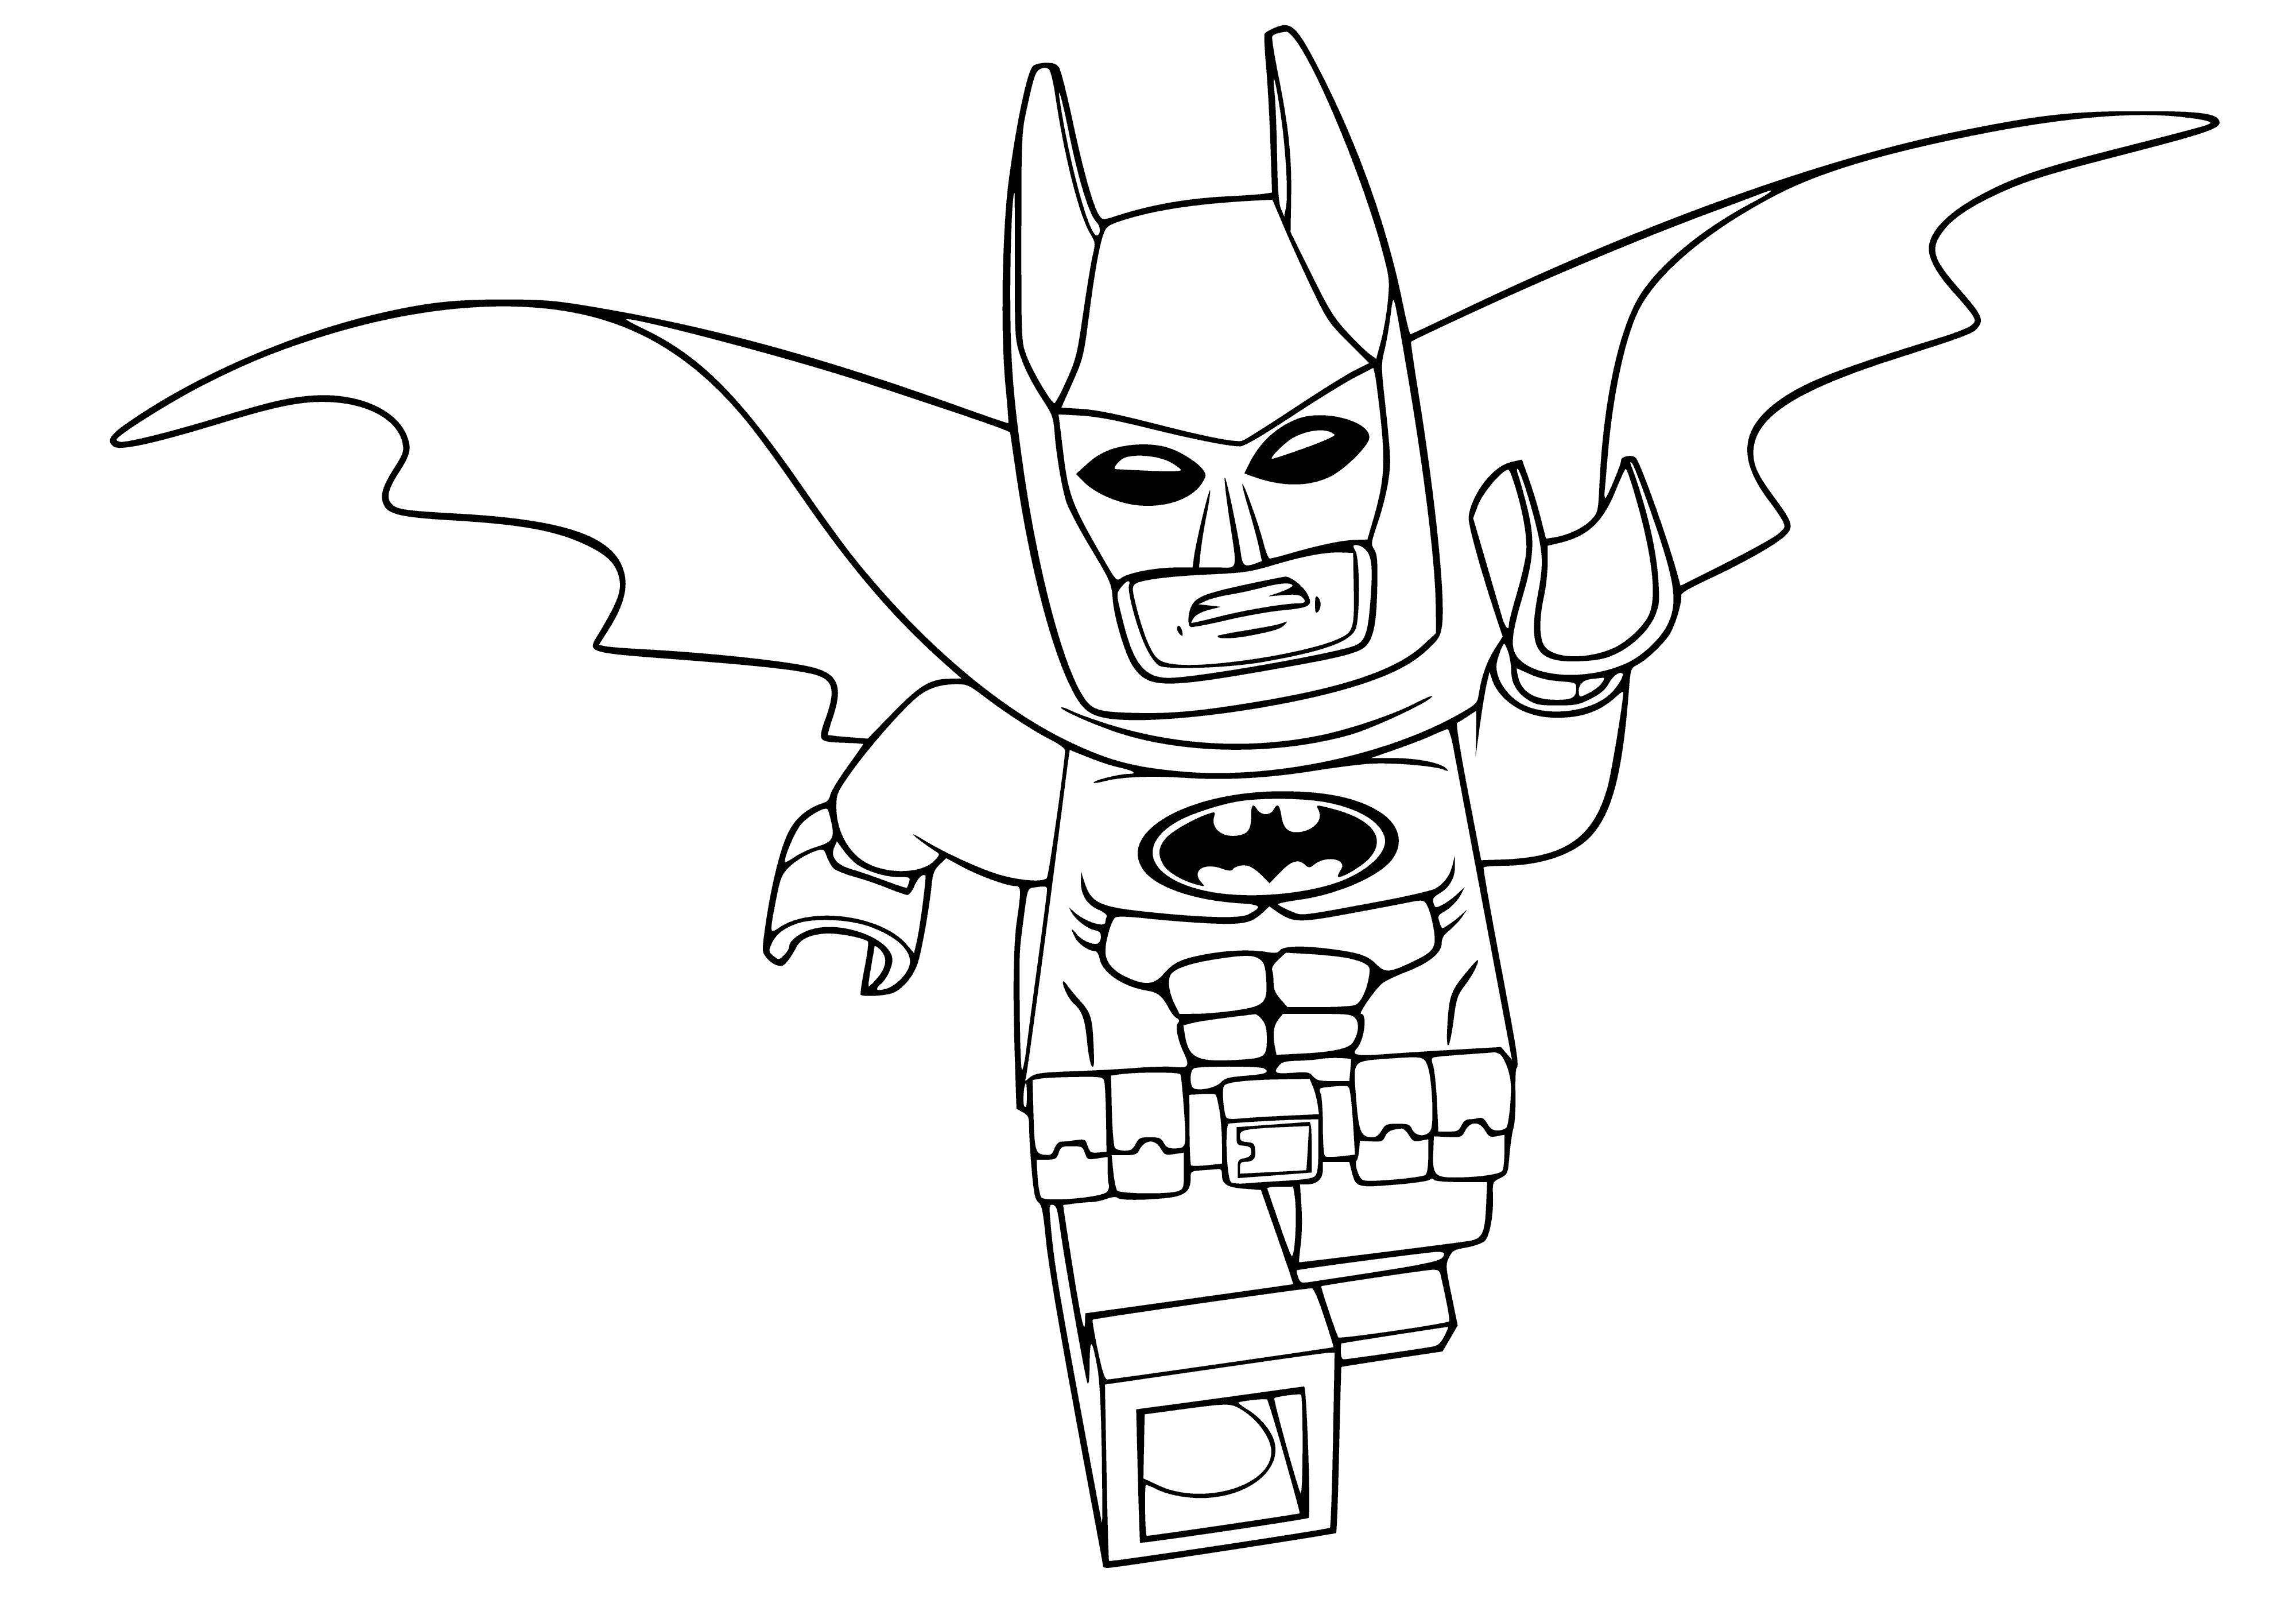 coloring page: LEGO Batman has black costume w/ yellow Batman symbol & utility belt, white eyes & black mask. Cape flowing dramatically behind him.